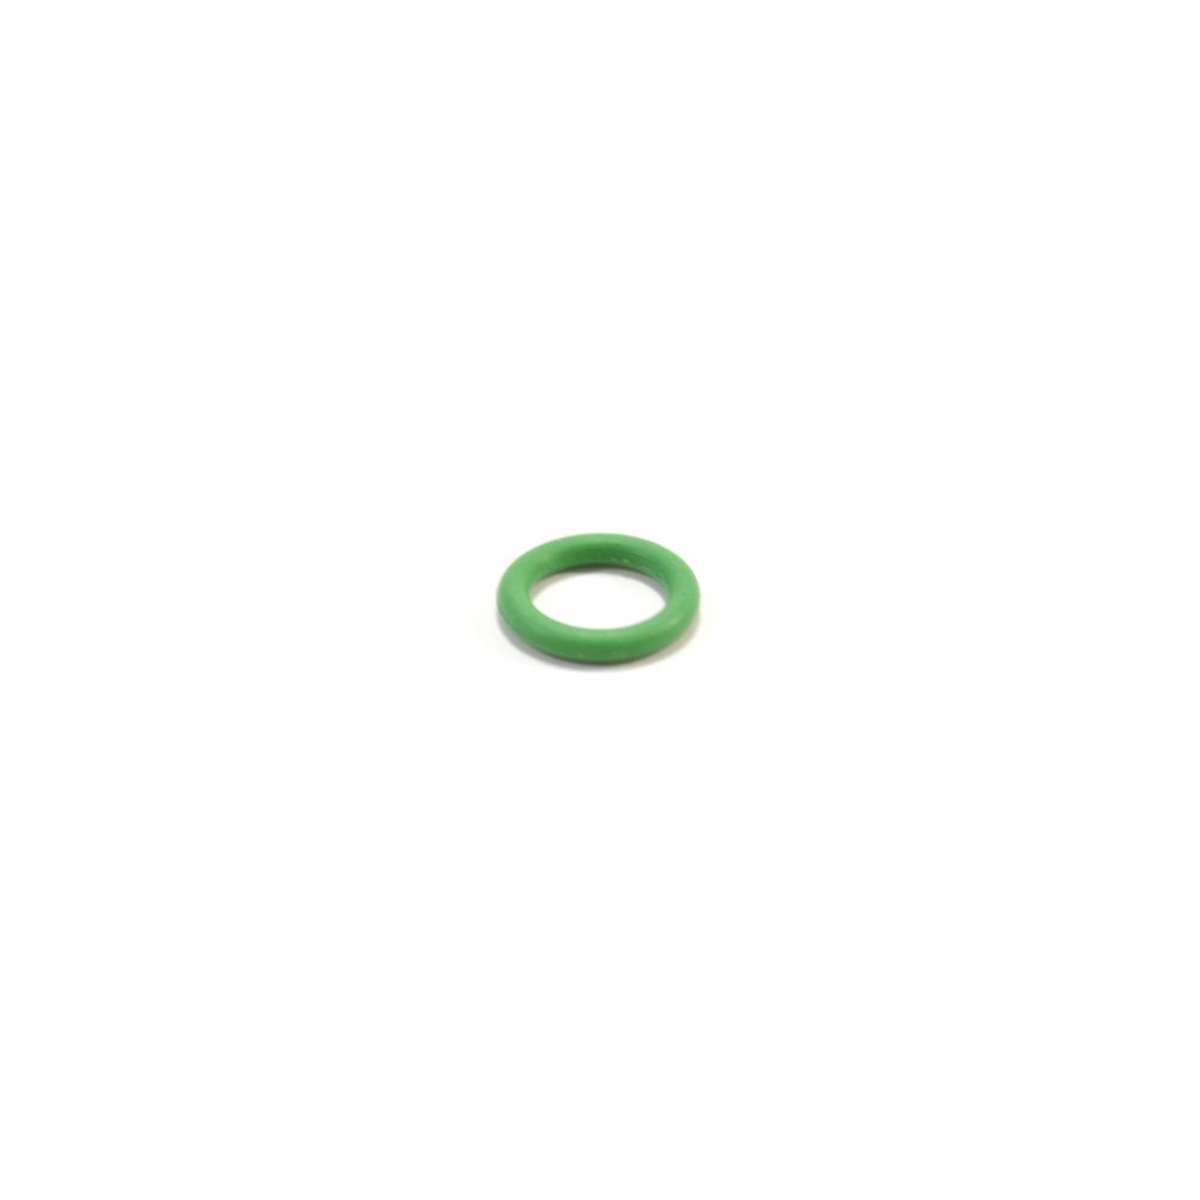 Green # 6 Hose Fitting O-Ring (3/8") (Bag 100)